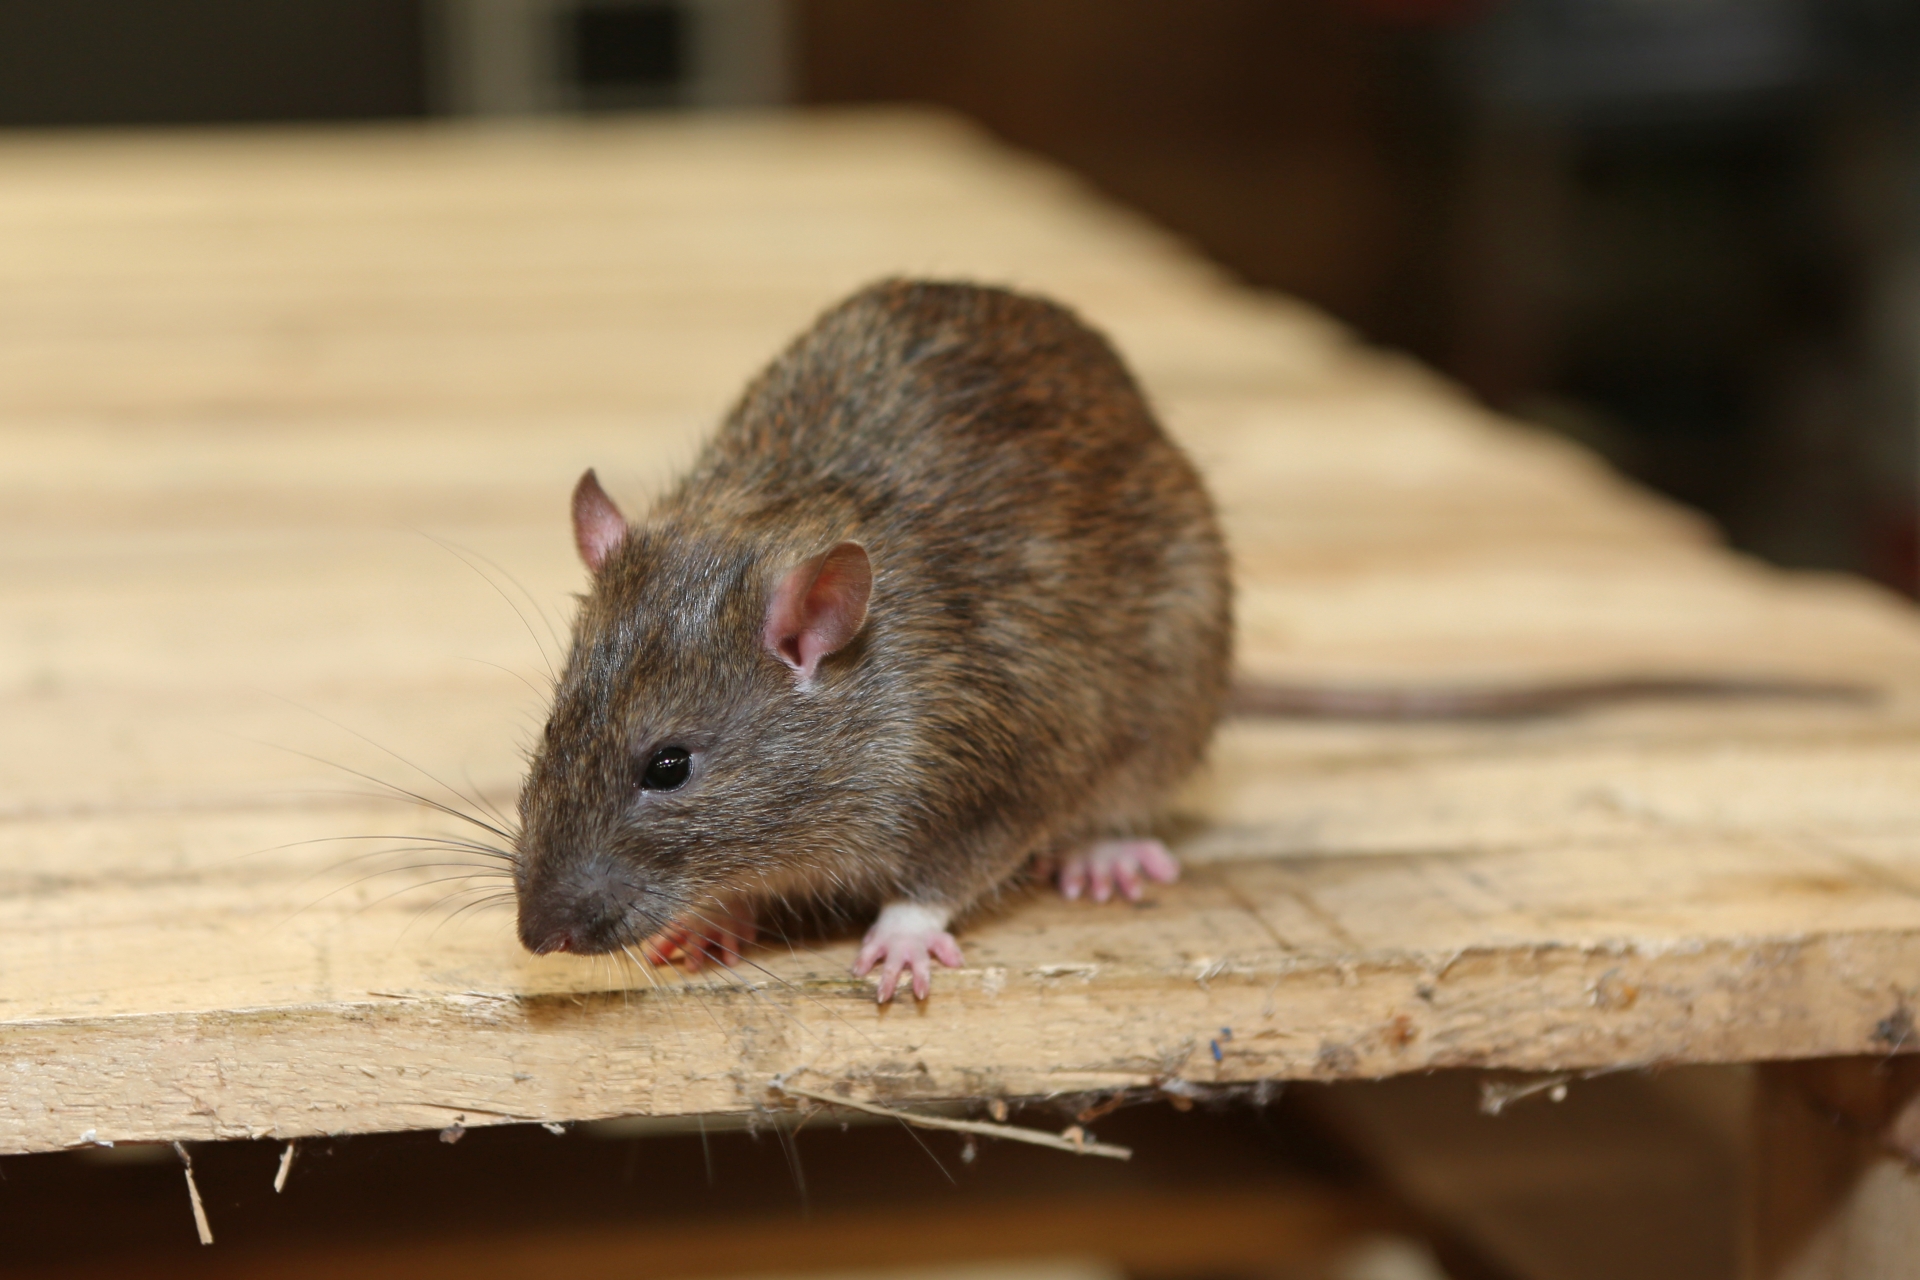 Rat extermination, Pest Control in West Wickham, BR4. Call Now 020 8166 9746